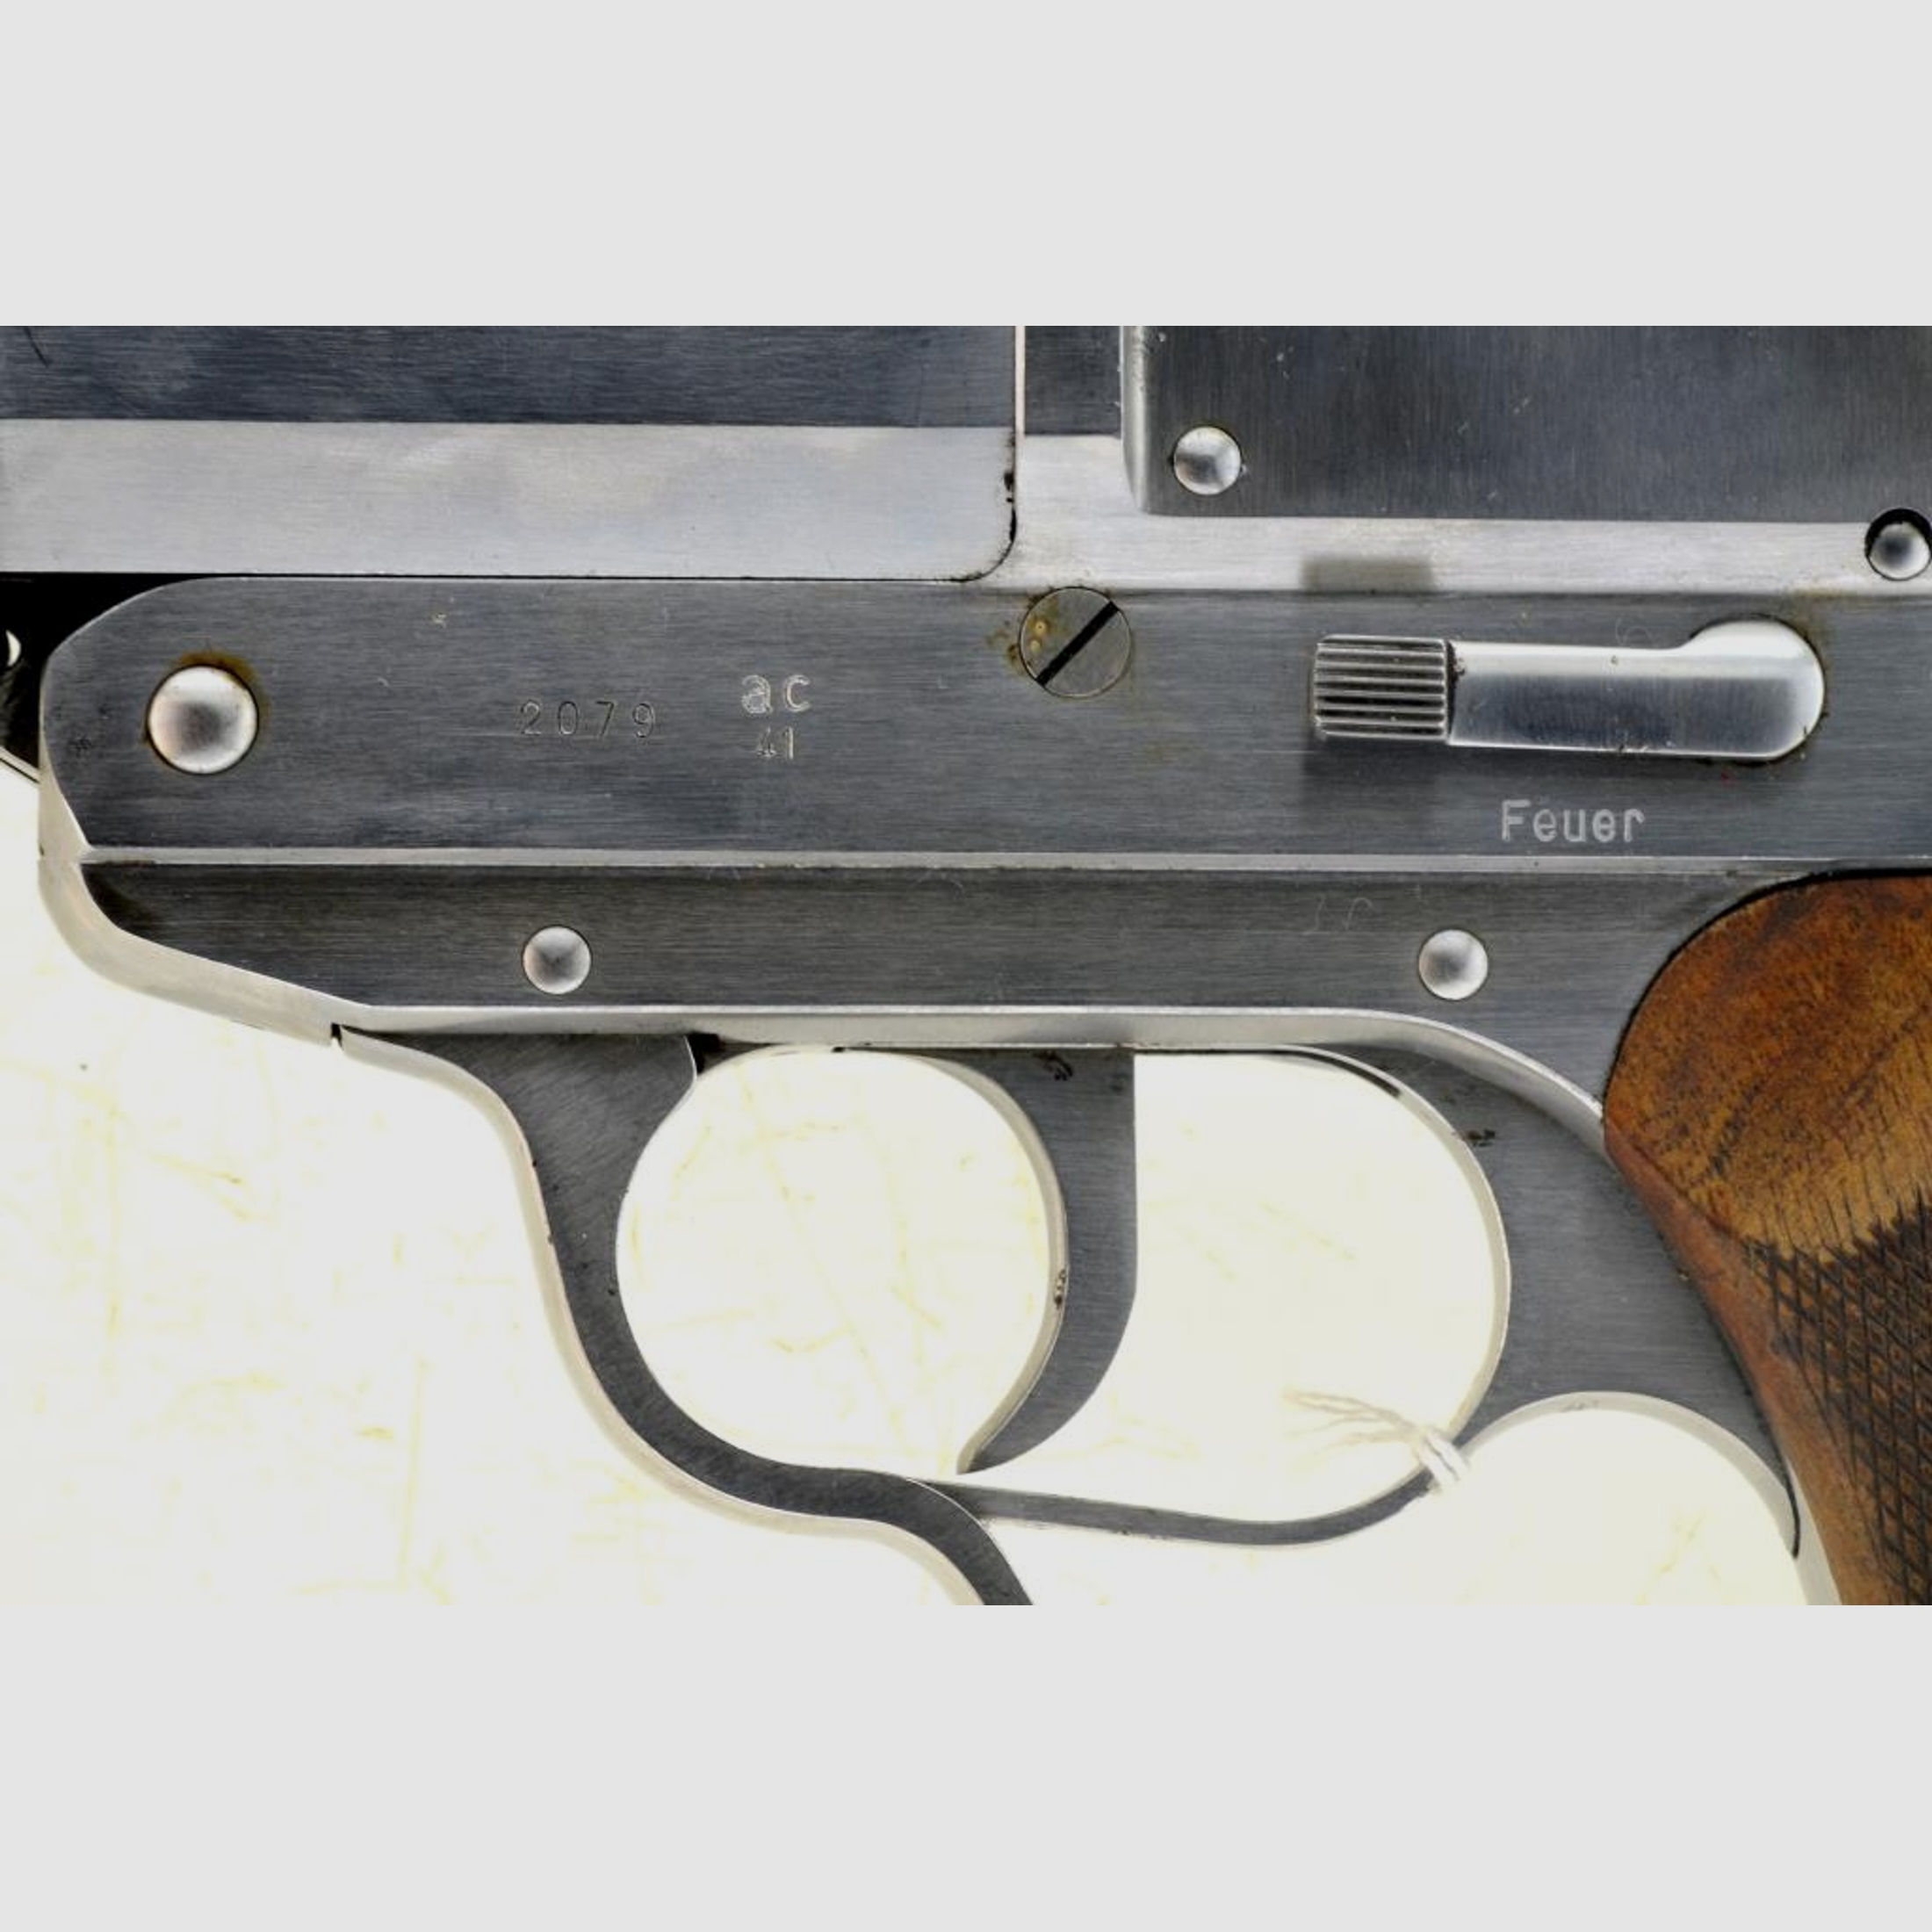 Signalpistole Walther "ac 41" Mod. SL